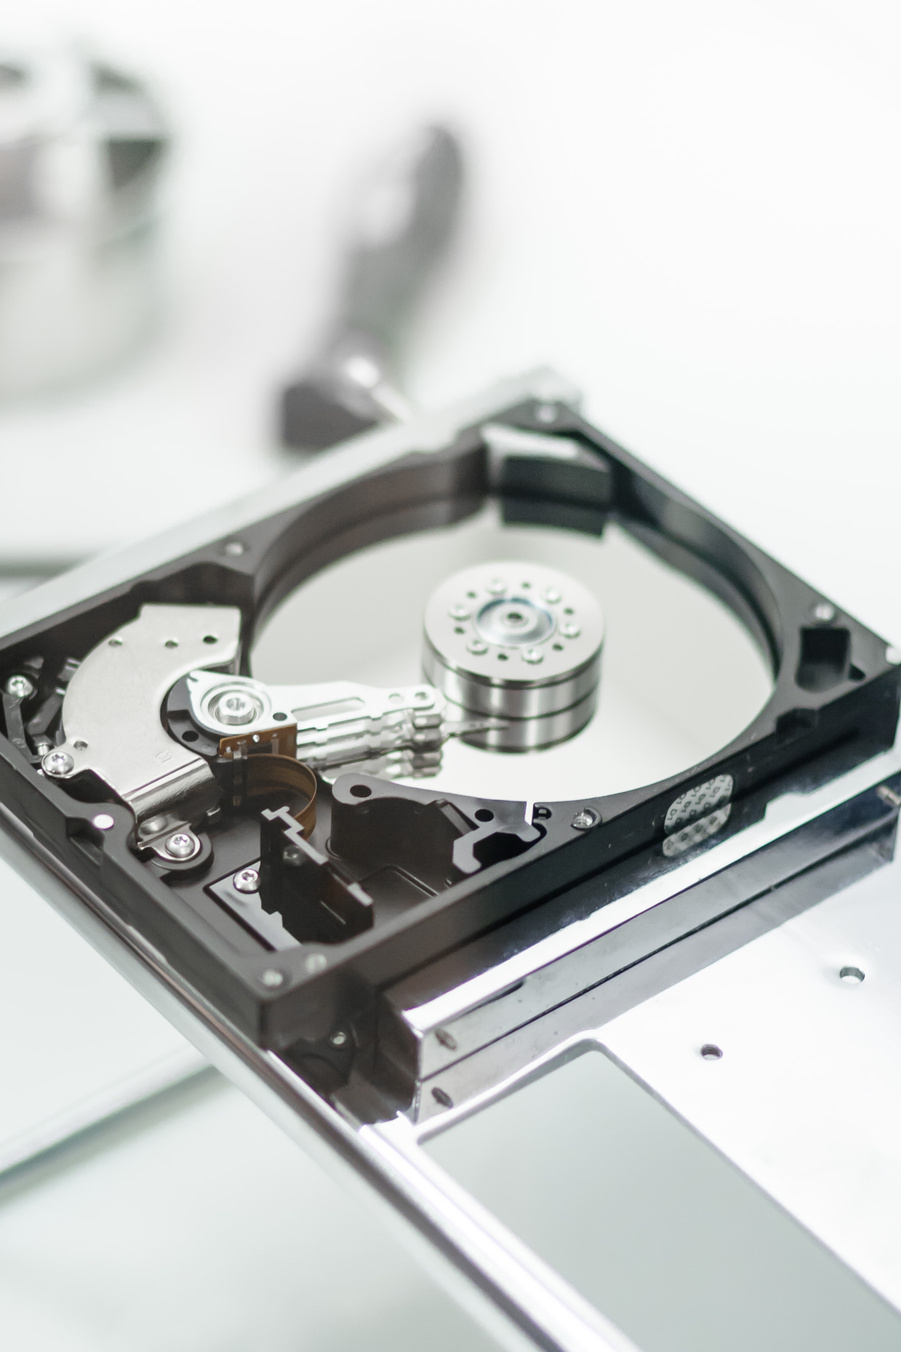 Disassembled Hard Disk Drive for Digital Forensics